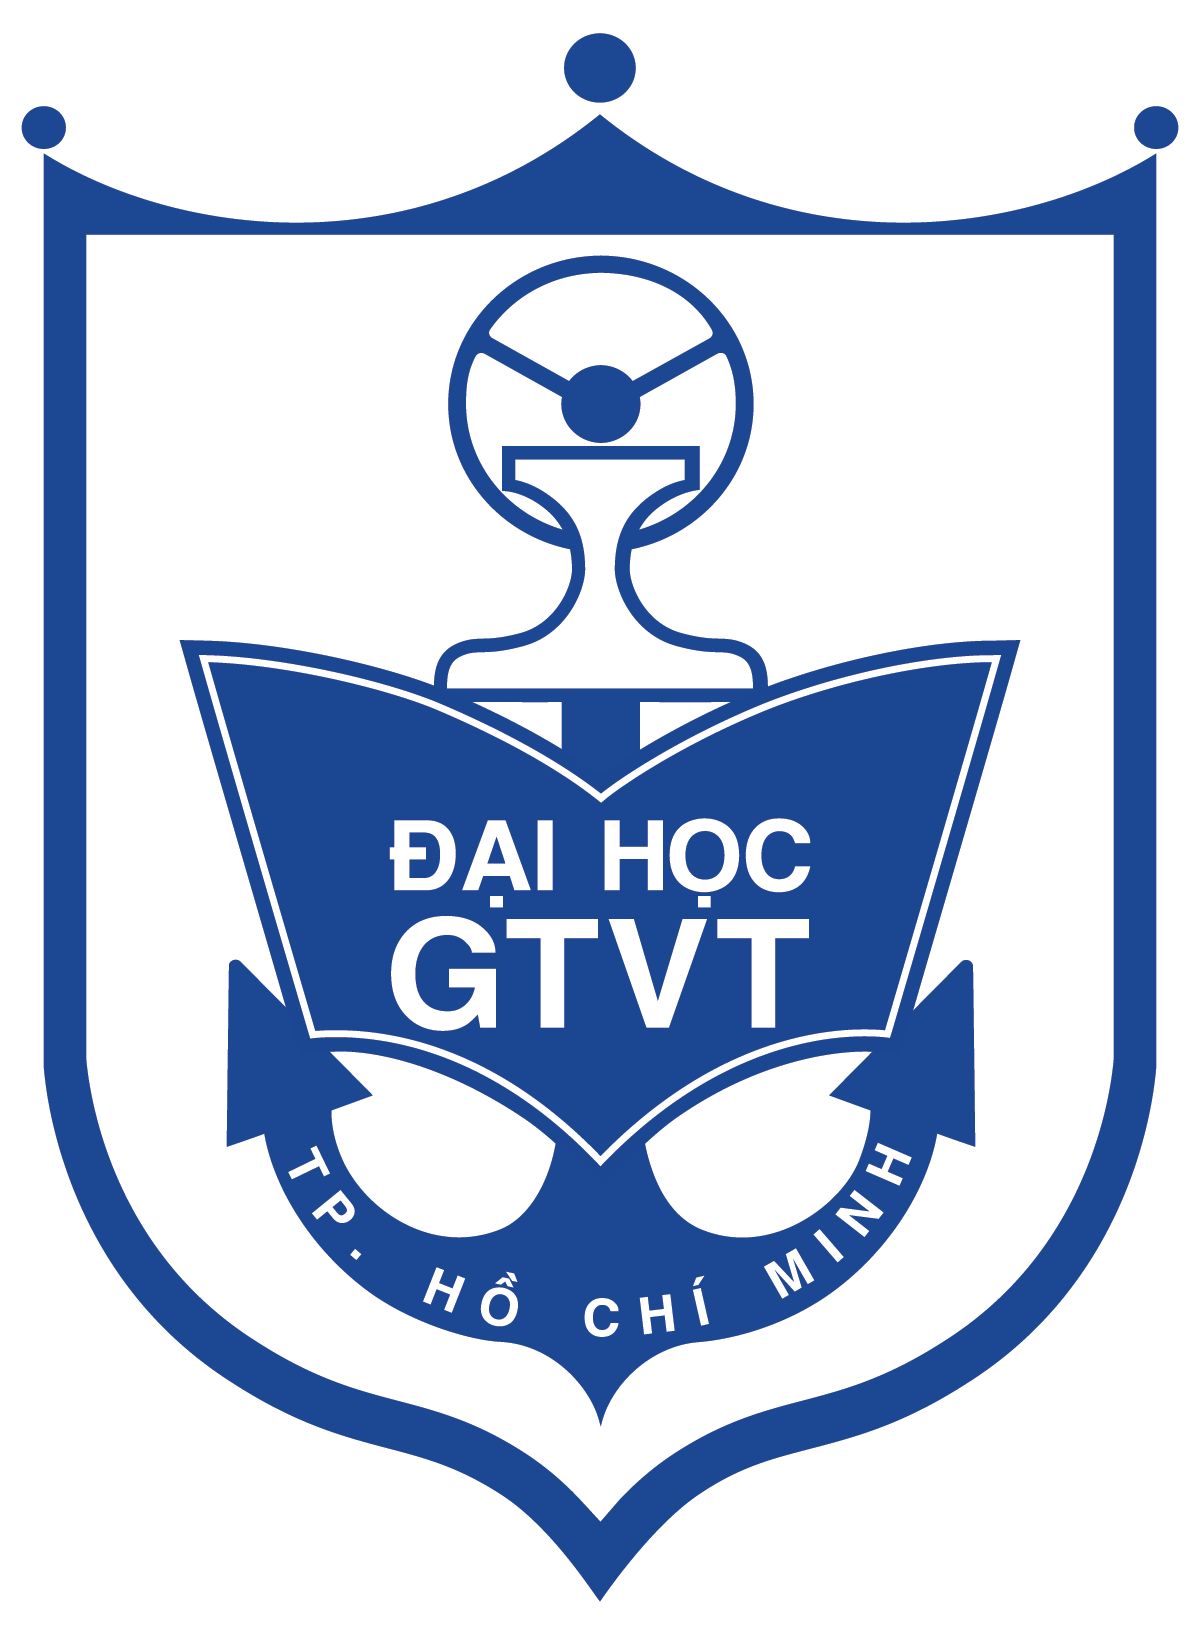 Logo DH Giao Thong Van Tai TPHCM HCMUT